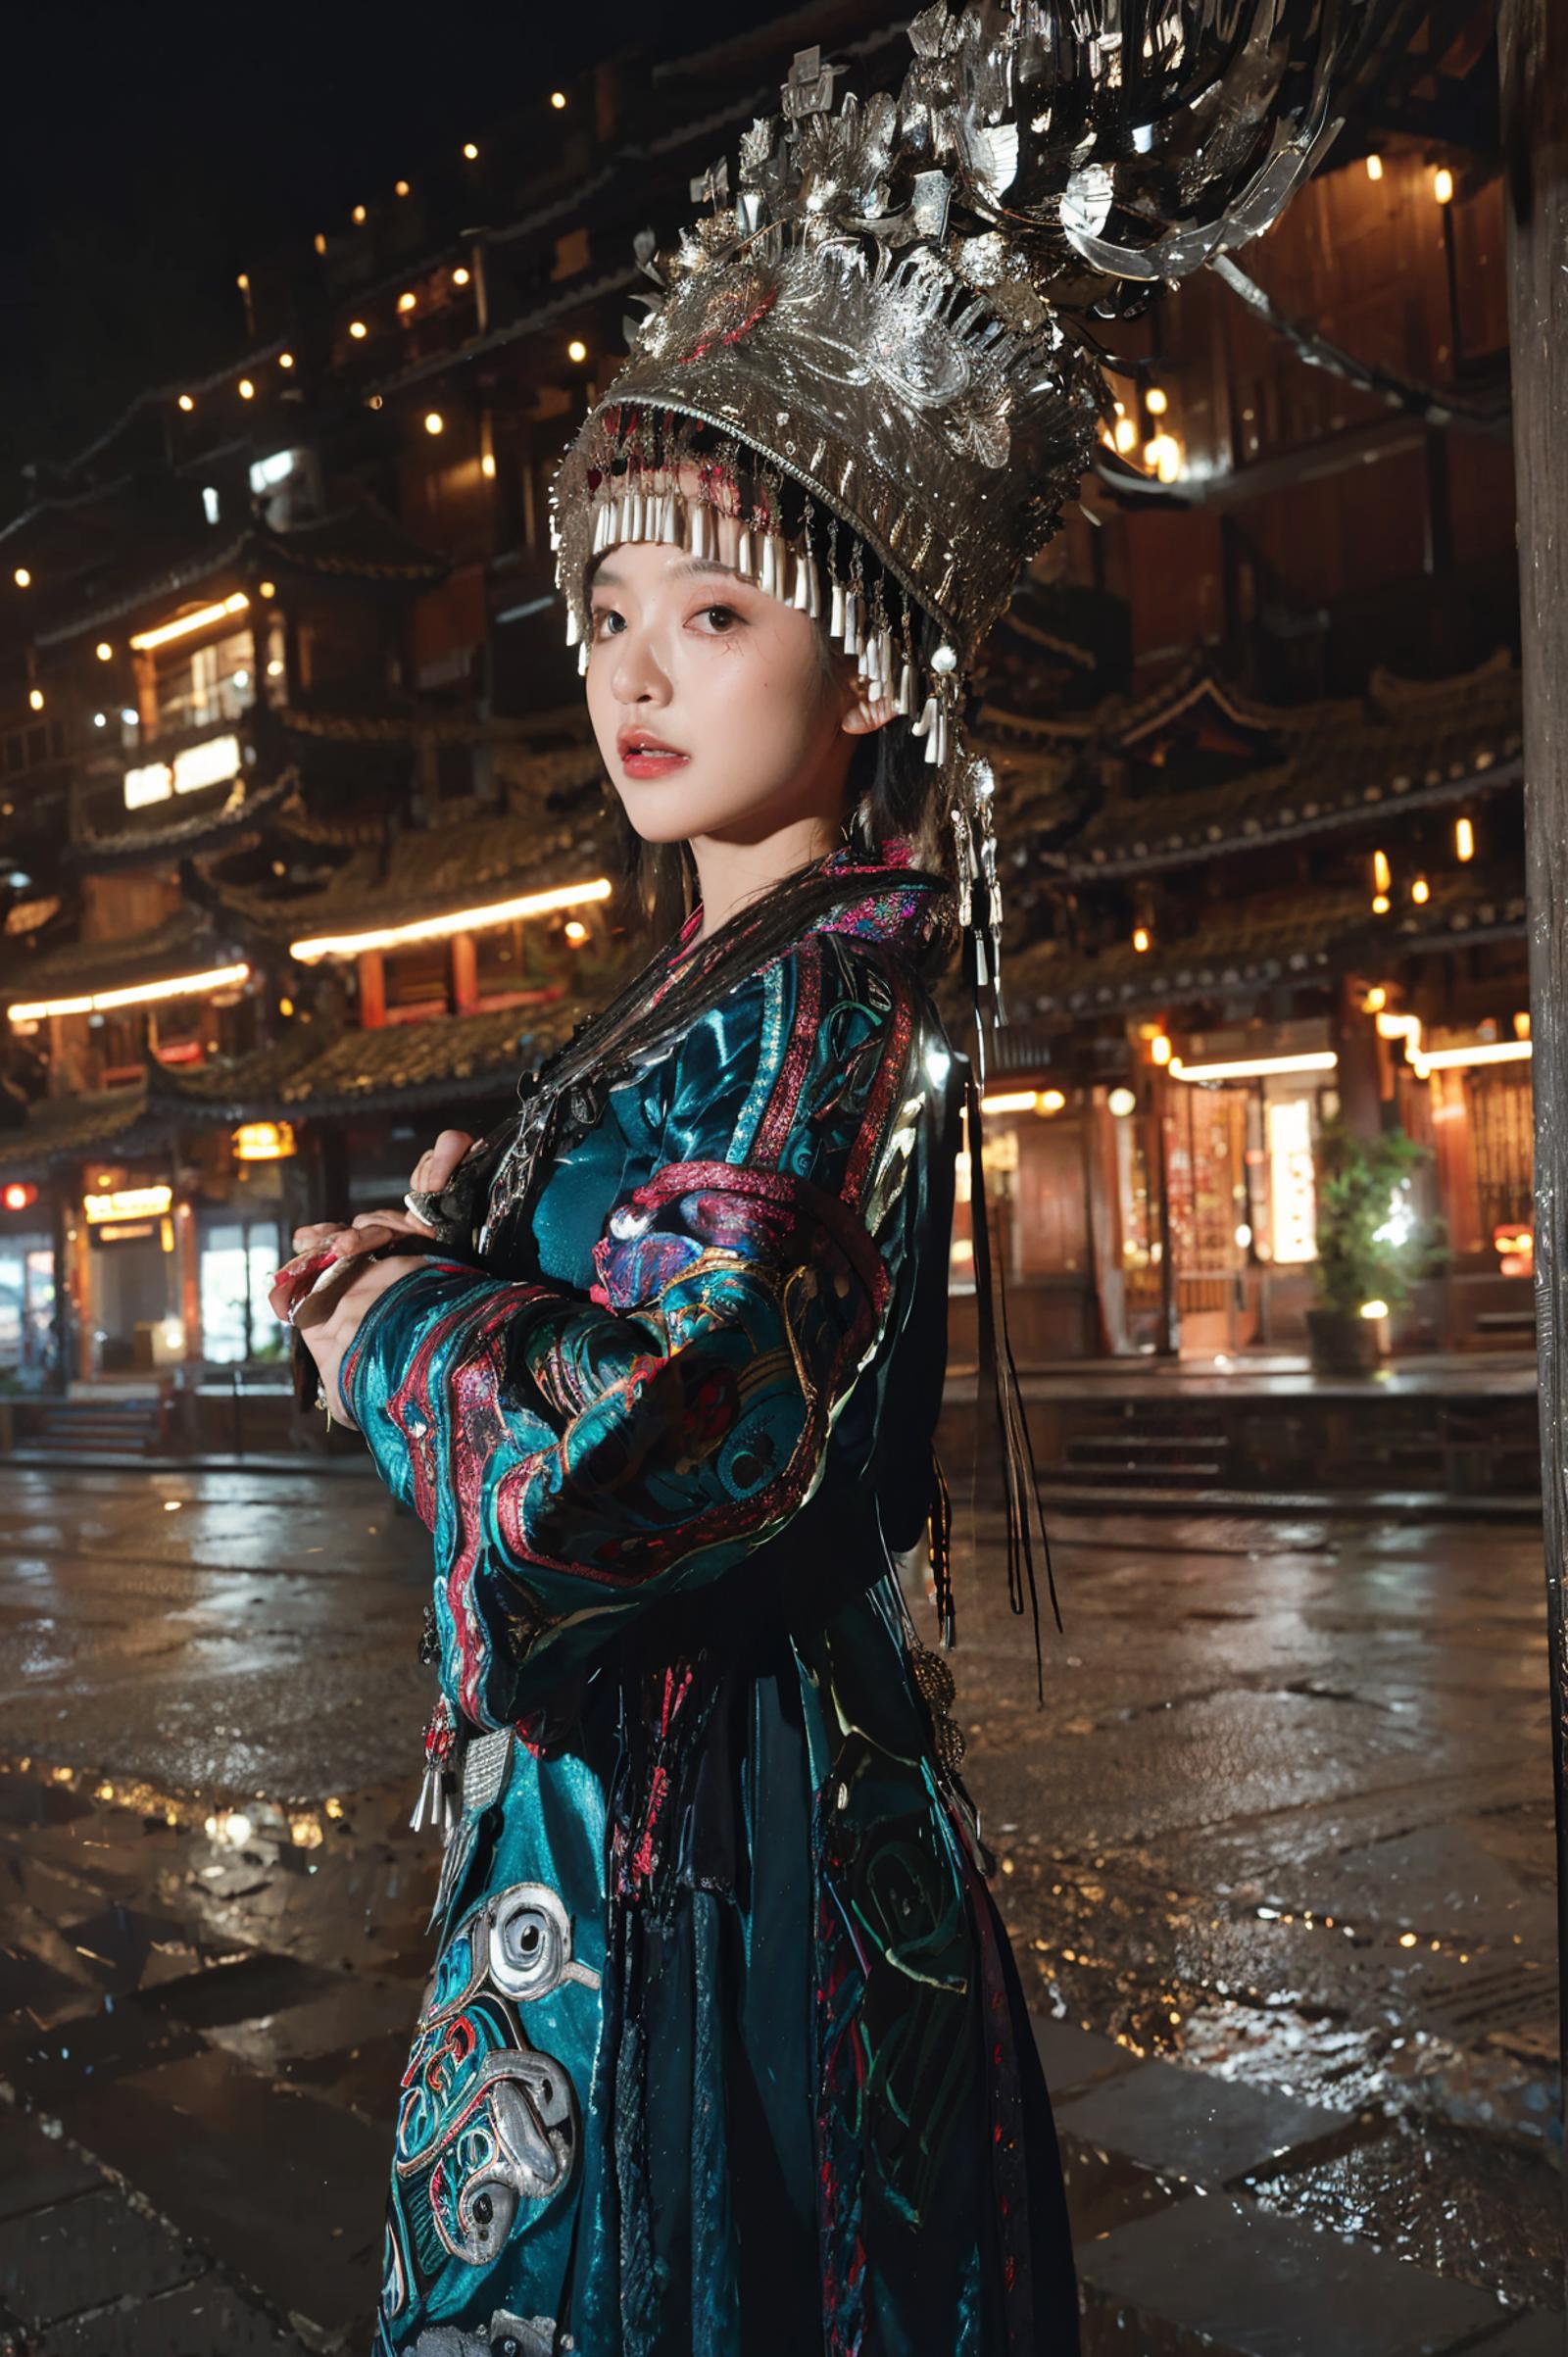 苗族服装XL | Hmong costume XL image by Showevr